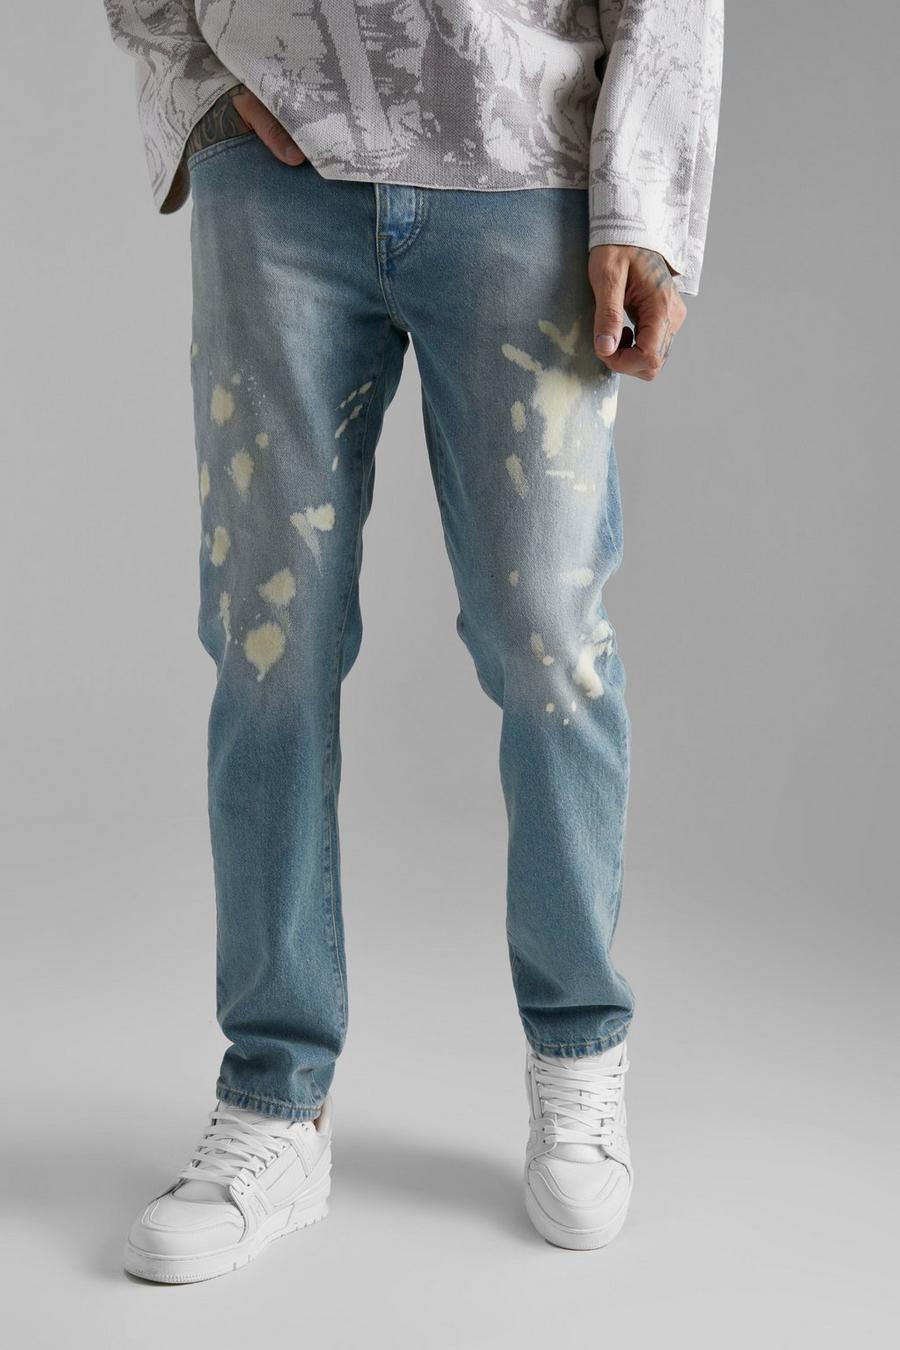 Paint Splatter Jeans